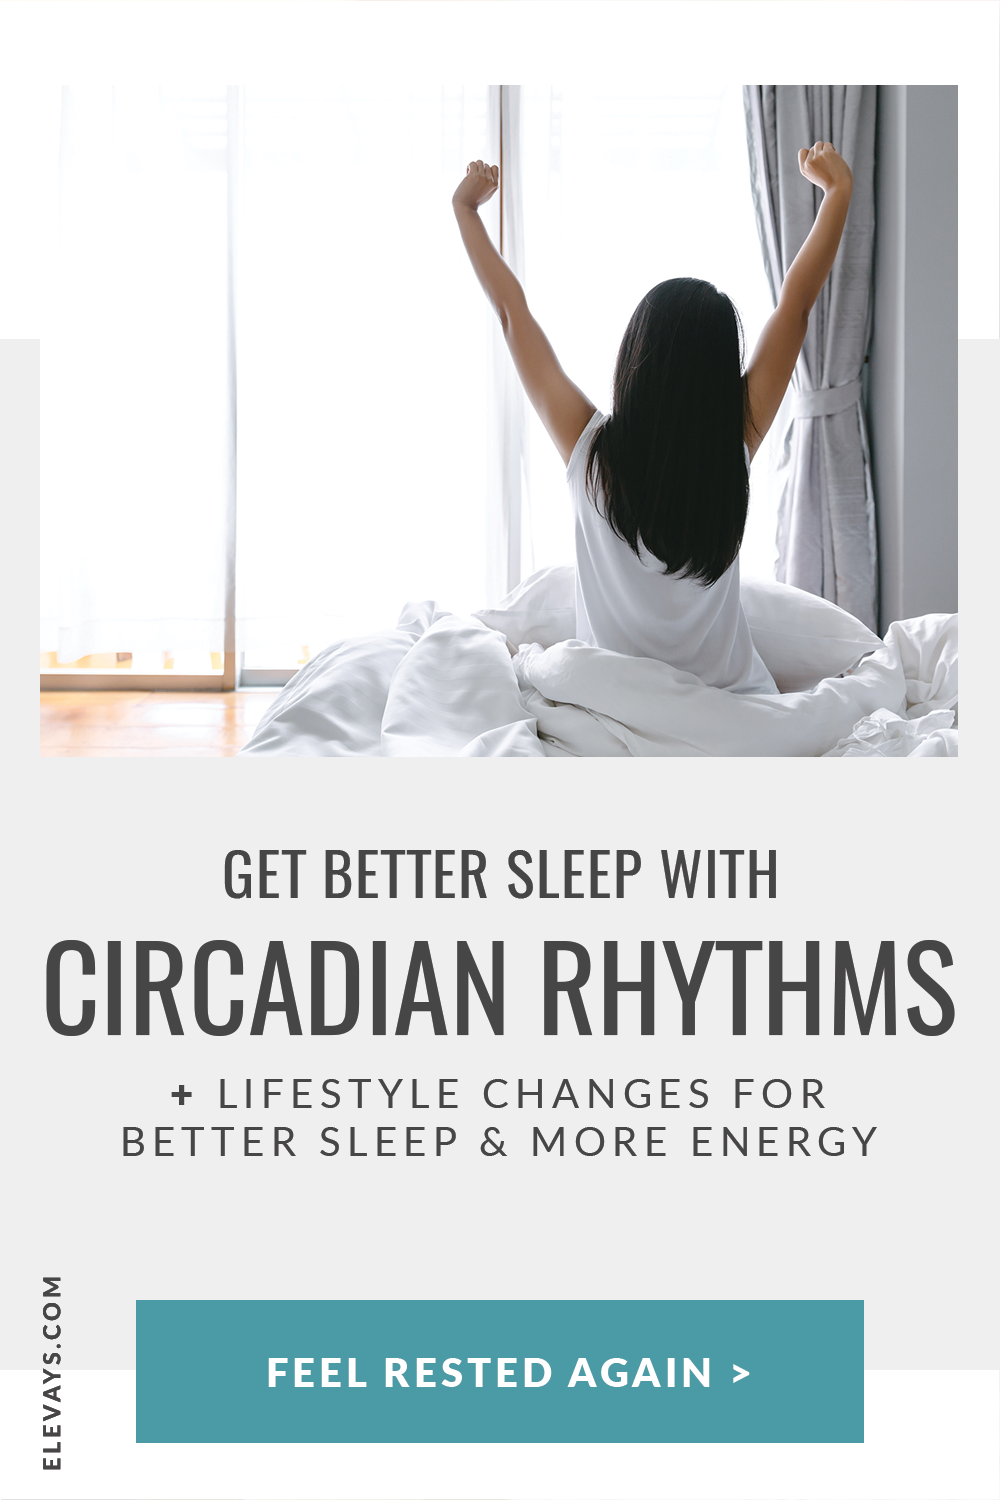 Get Better Sleep with Circadian Rhythms + Lifestyle Changes for Better Sleep & Energy